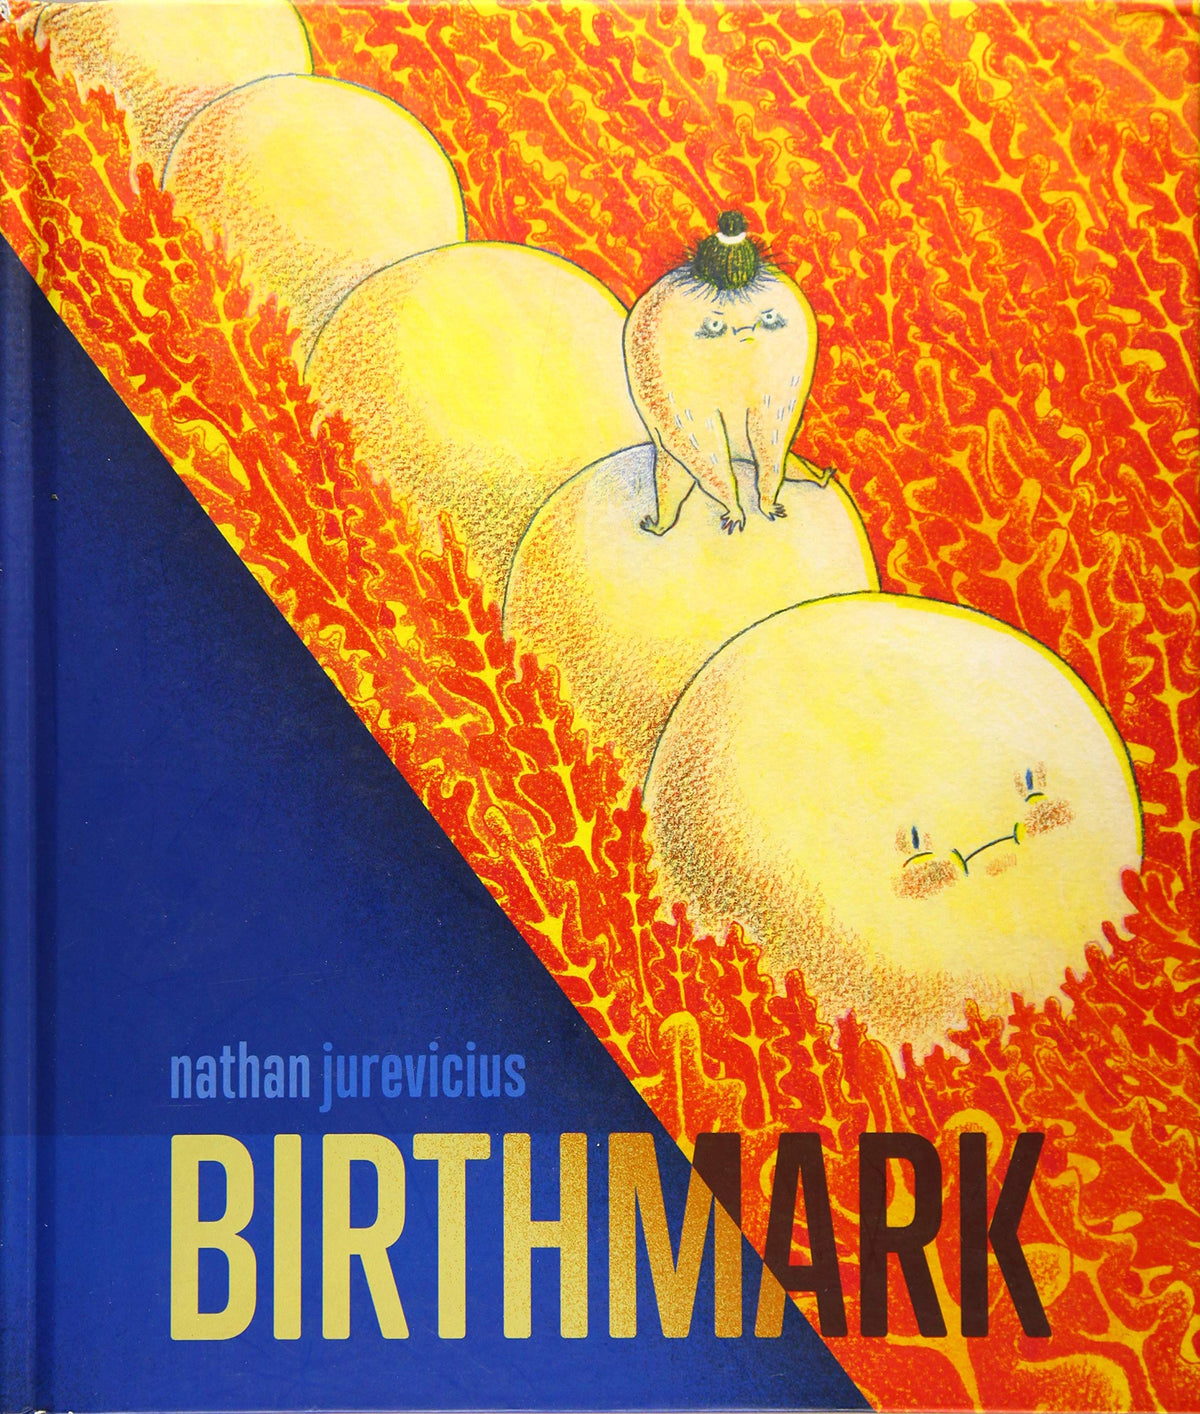 Birthmark - Third Eye